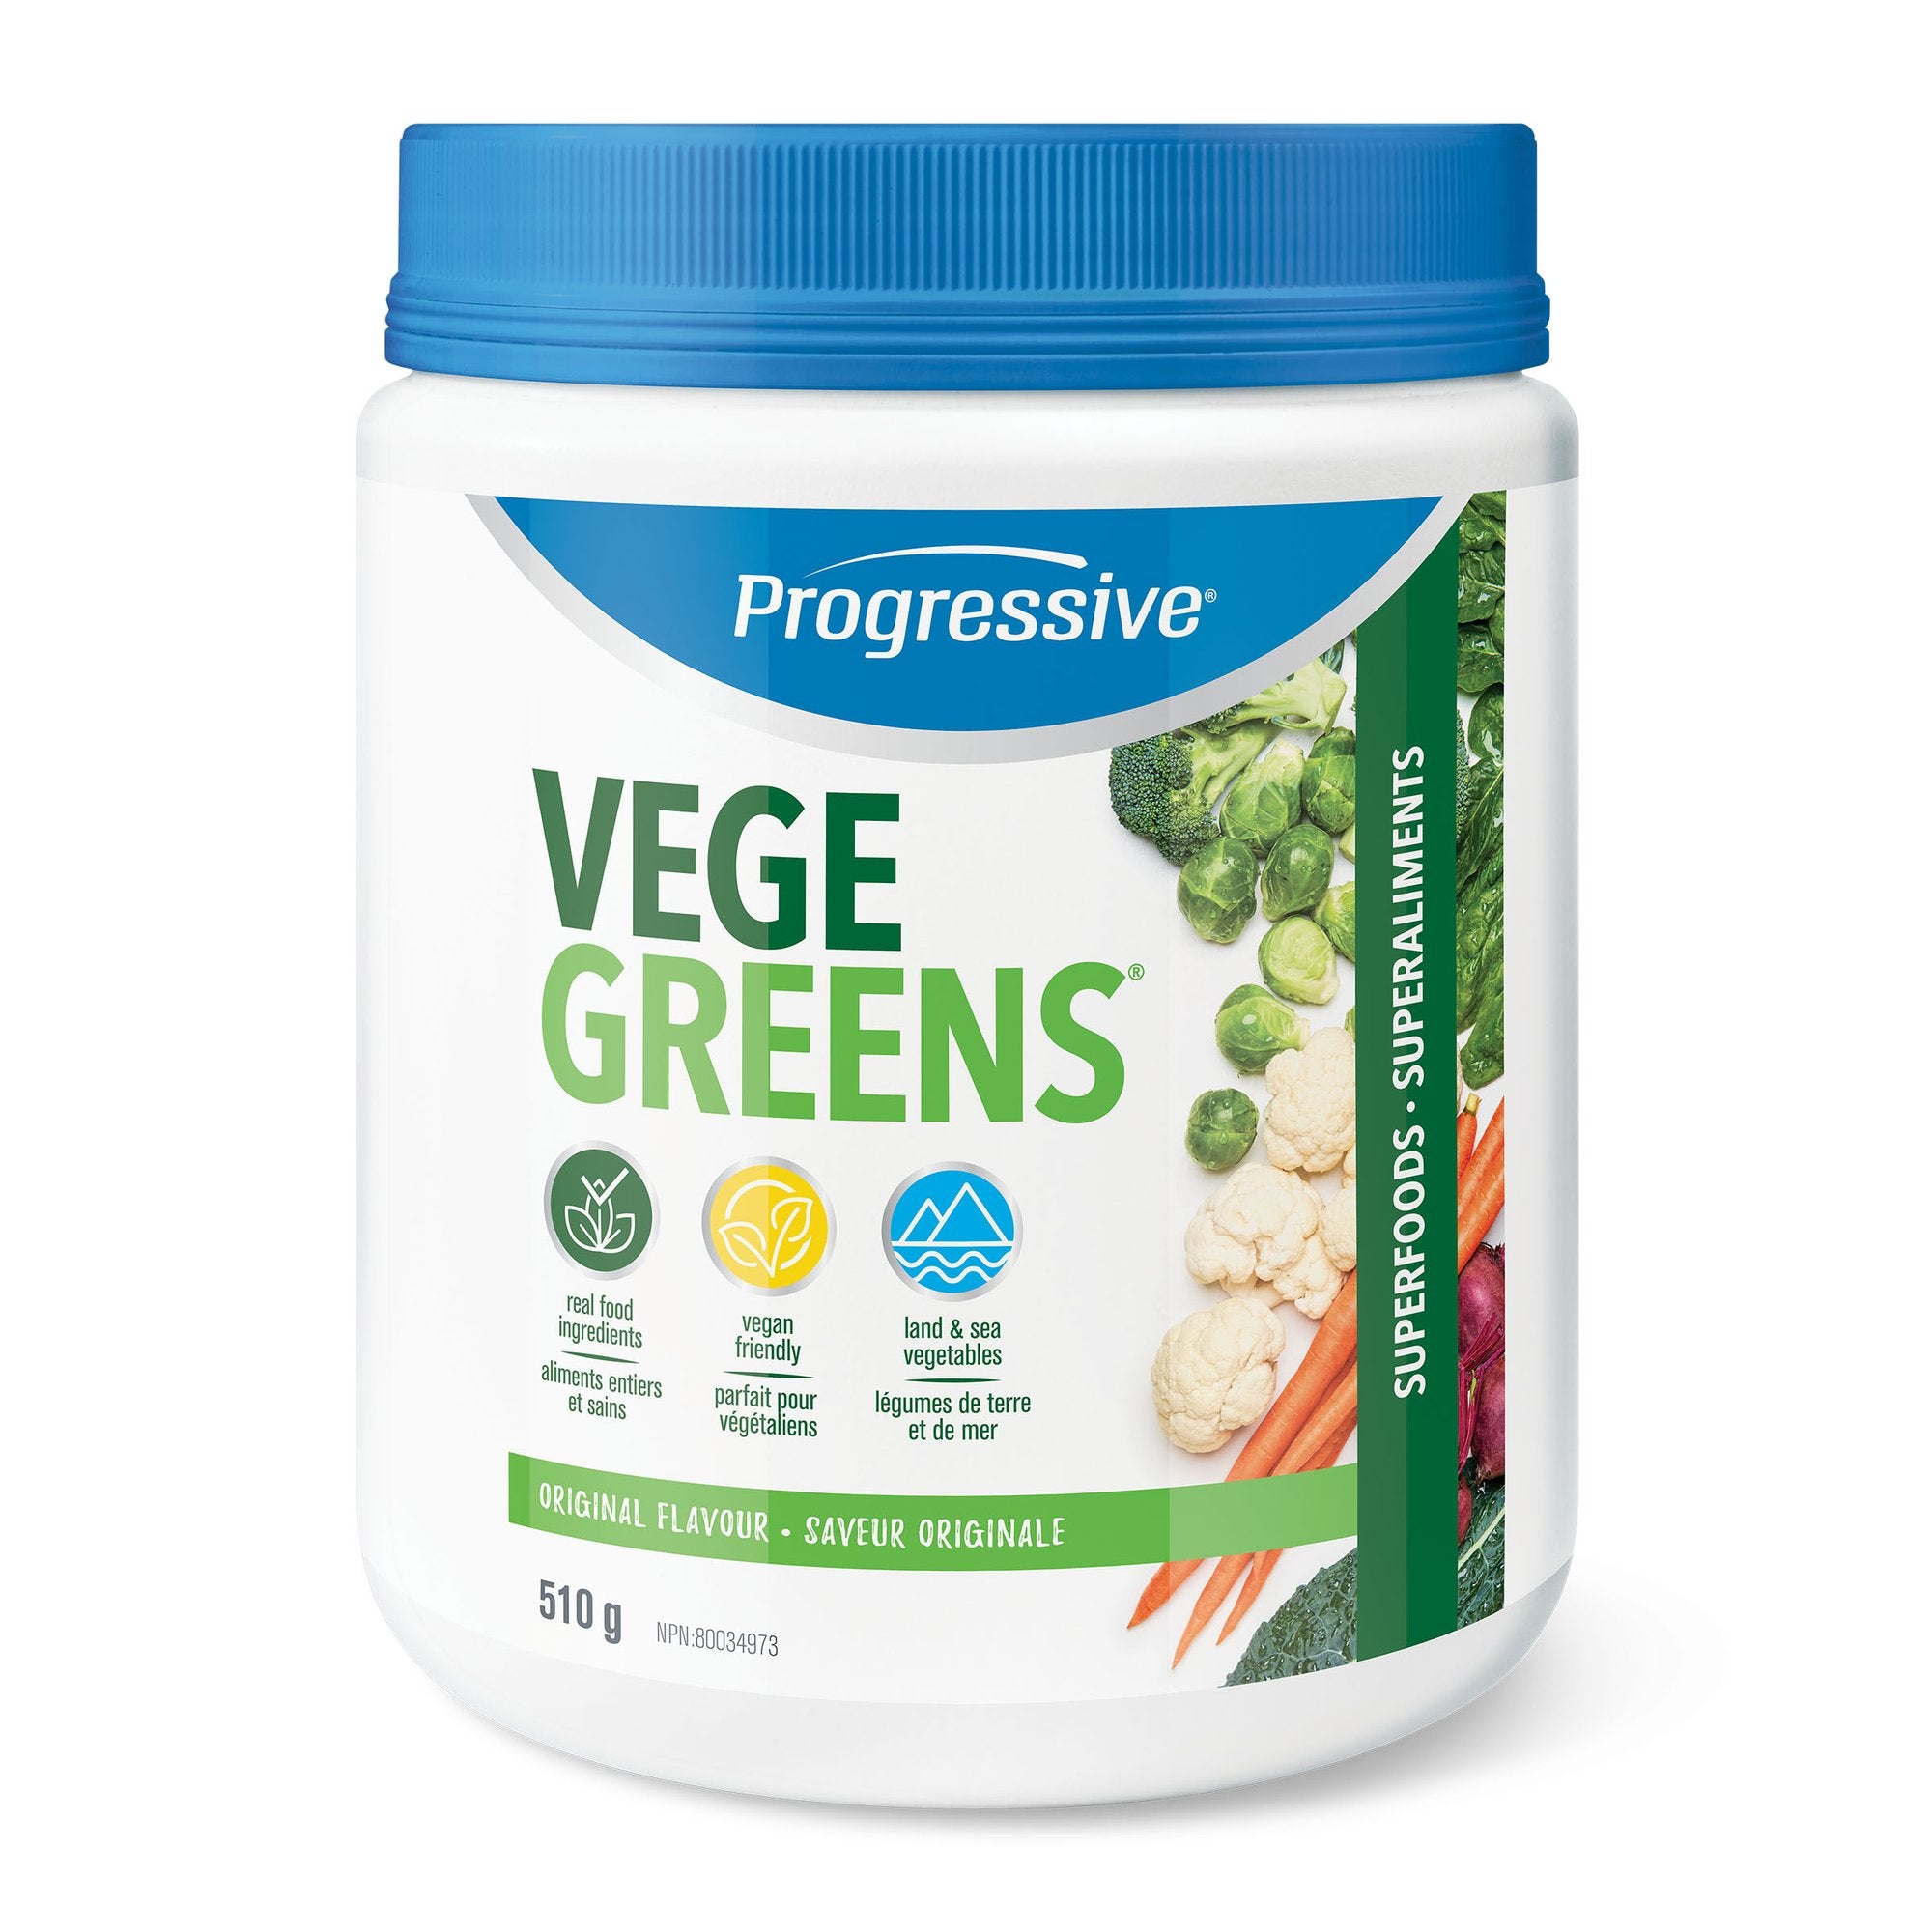 Vege Greens - Saveur originale - Progressive